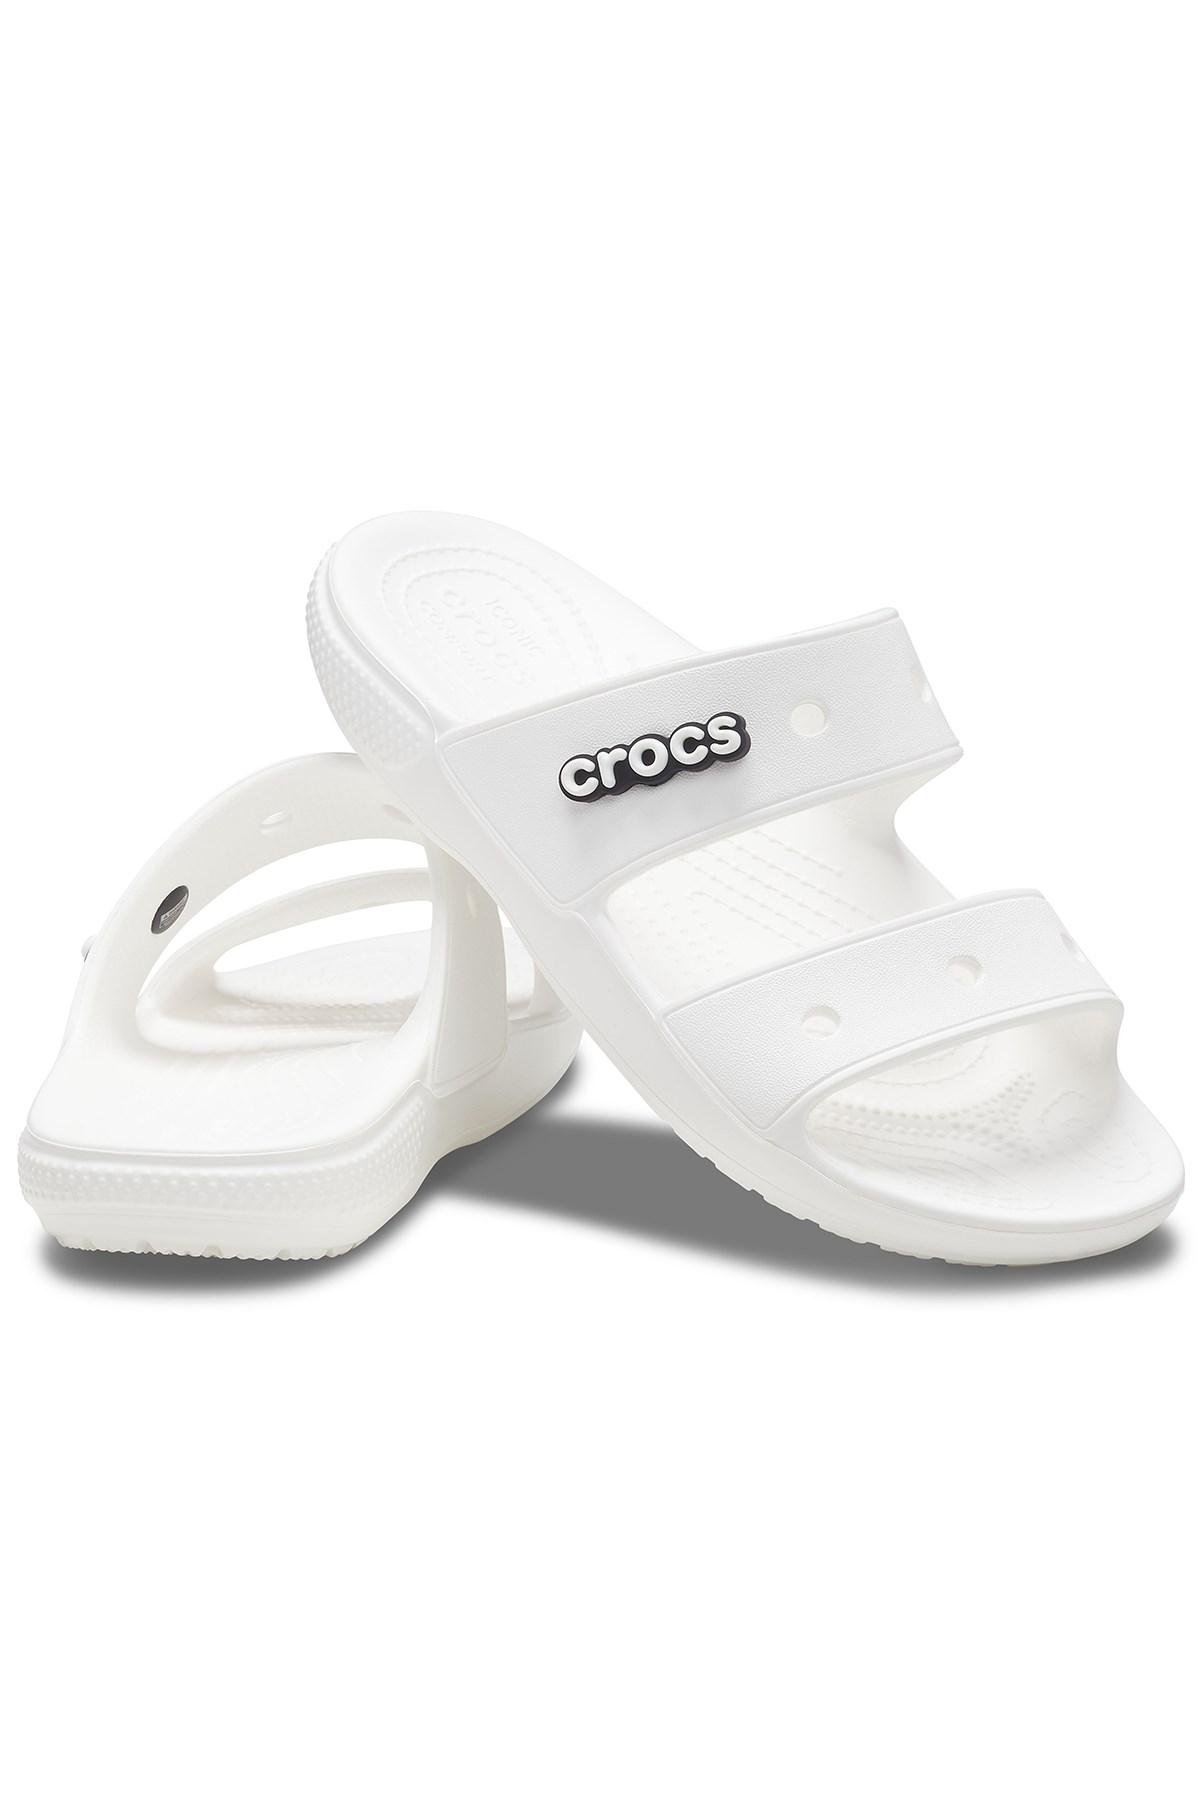 Crocs Classic Crocs Sandal Beyaz